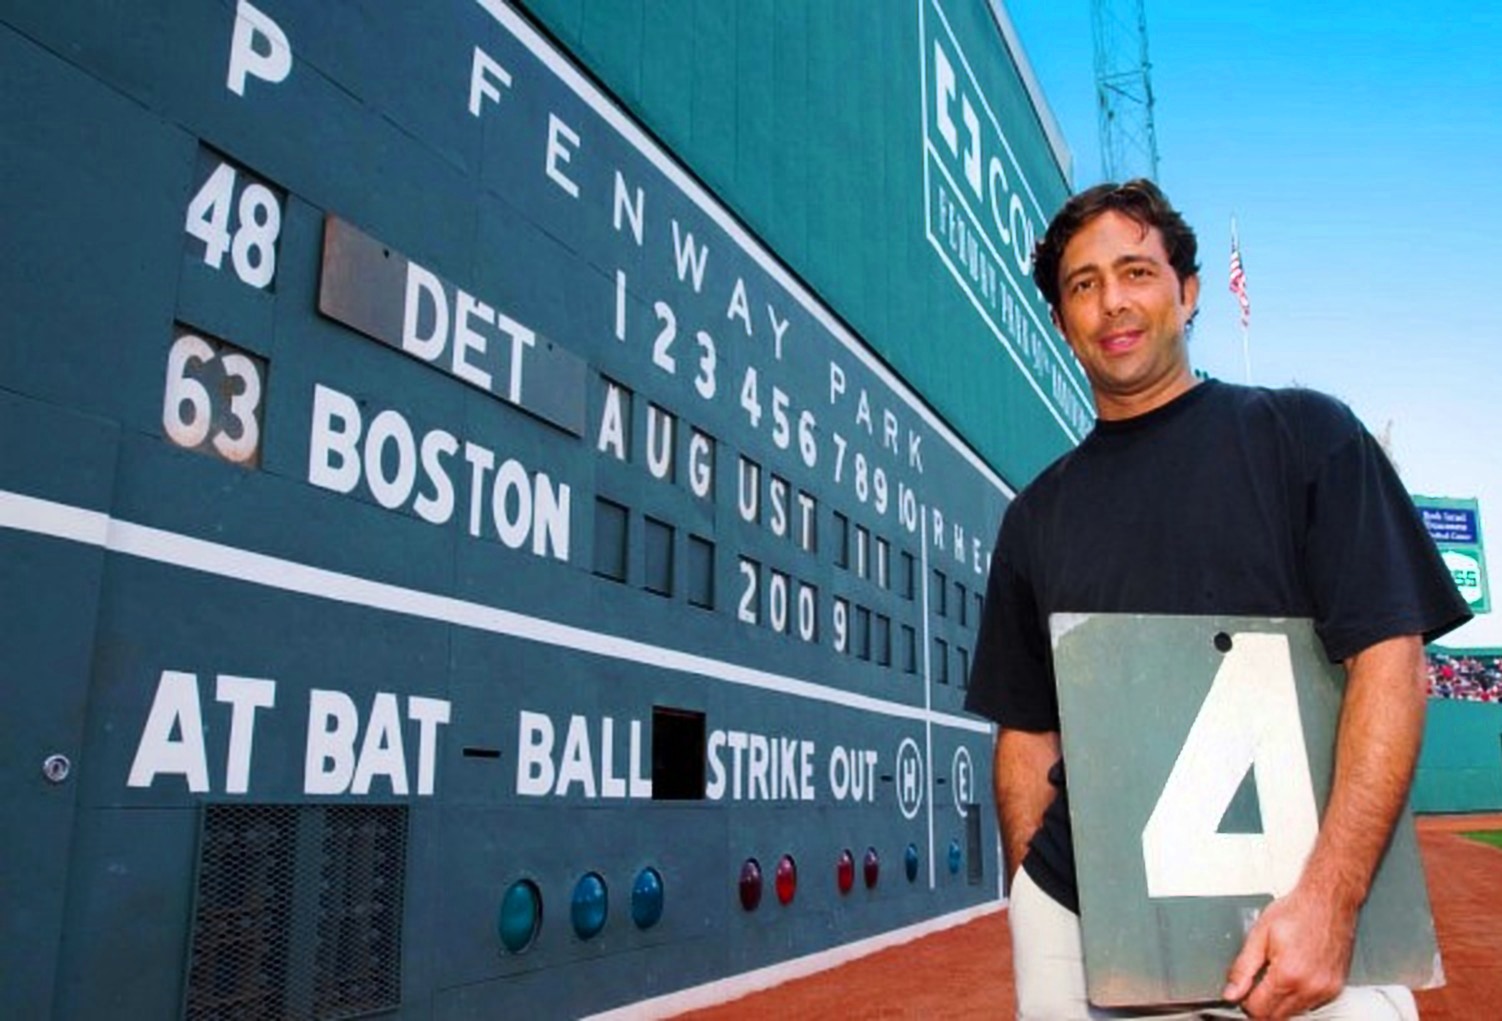 boston-fenway-park-scoreboard.v1.jpg